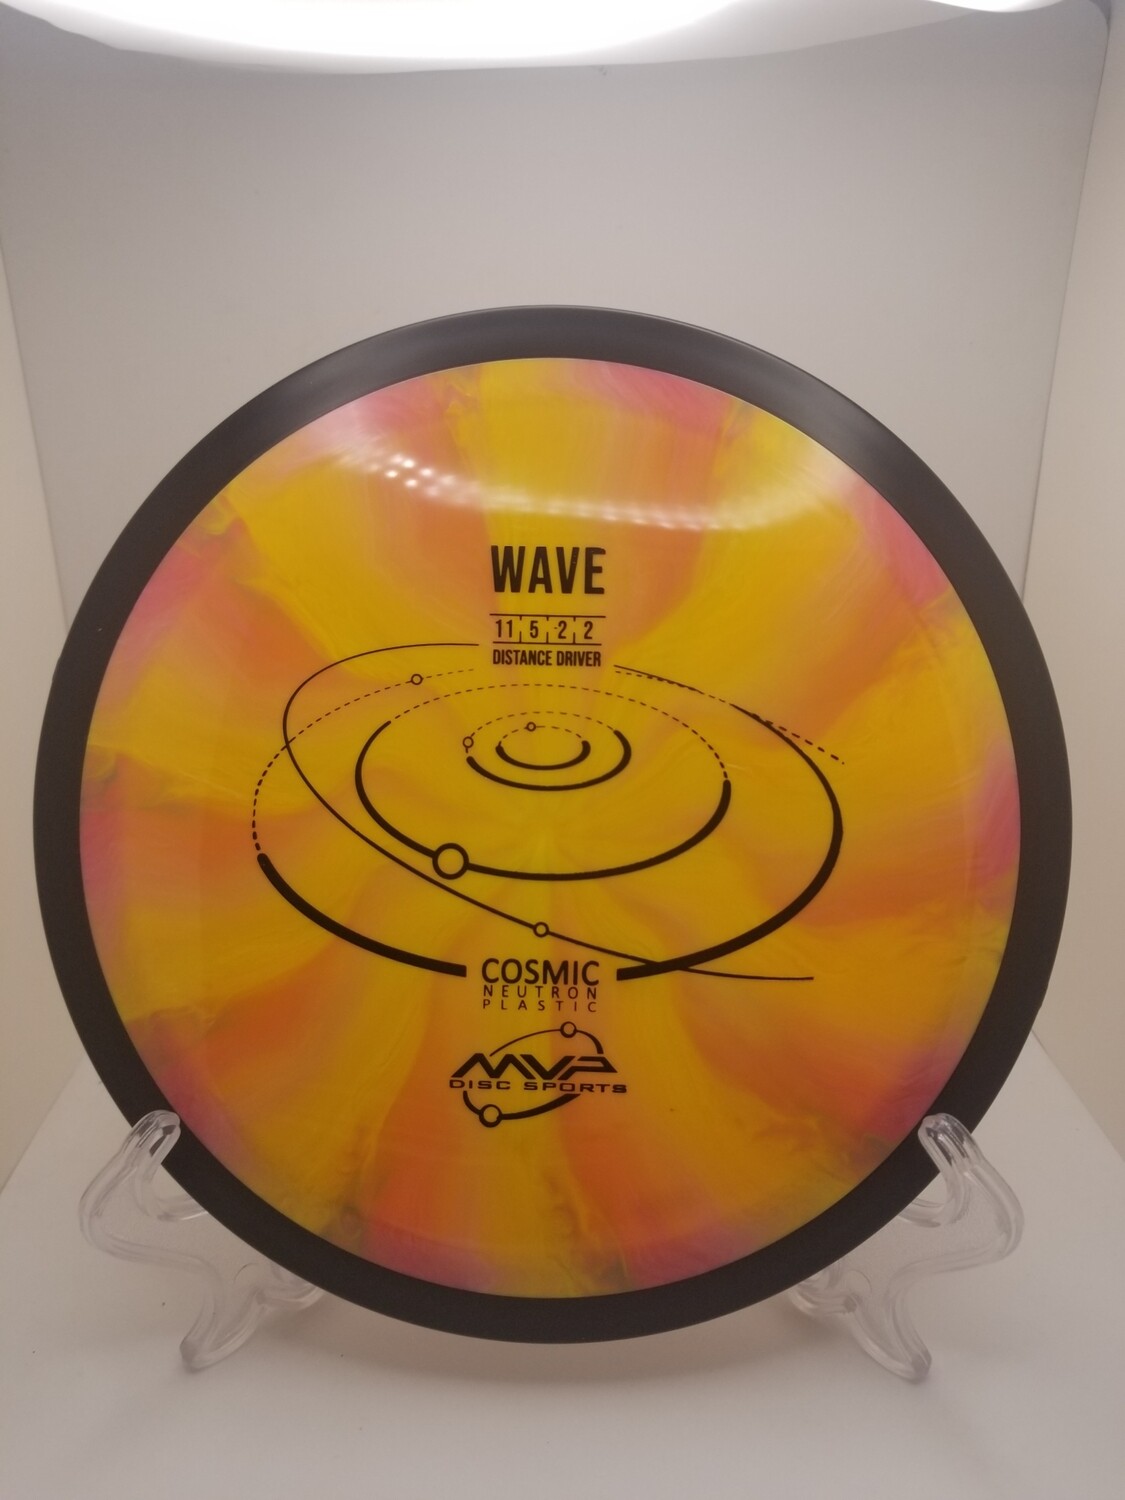 MVP Discs Wave Orange Swirl Cosmic Neutron Stamped 158g.